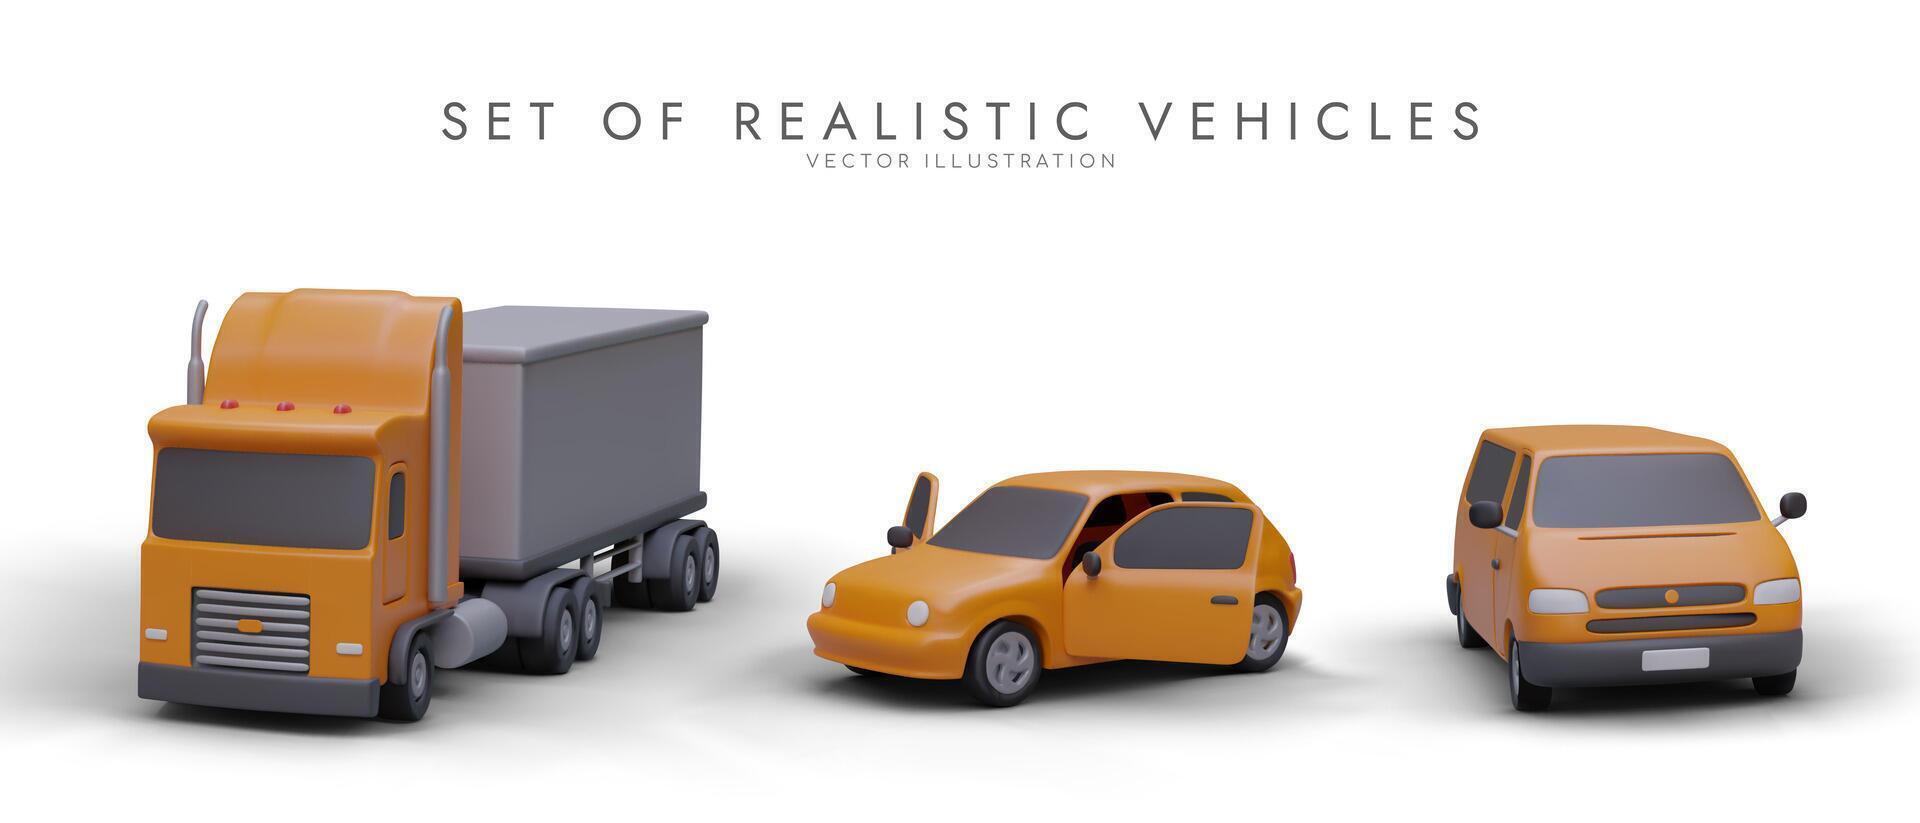 Set of realistic vehicles with shadows. 3D truck, minivan, car vector